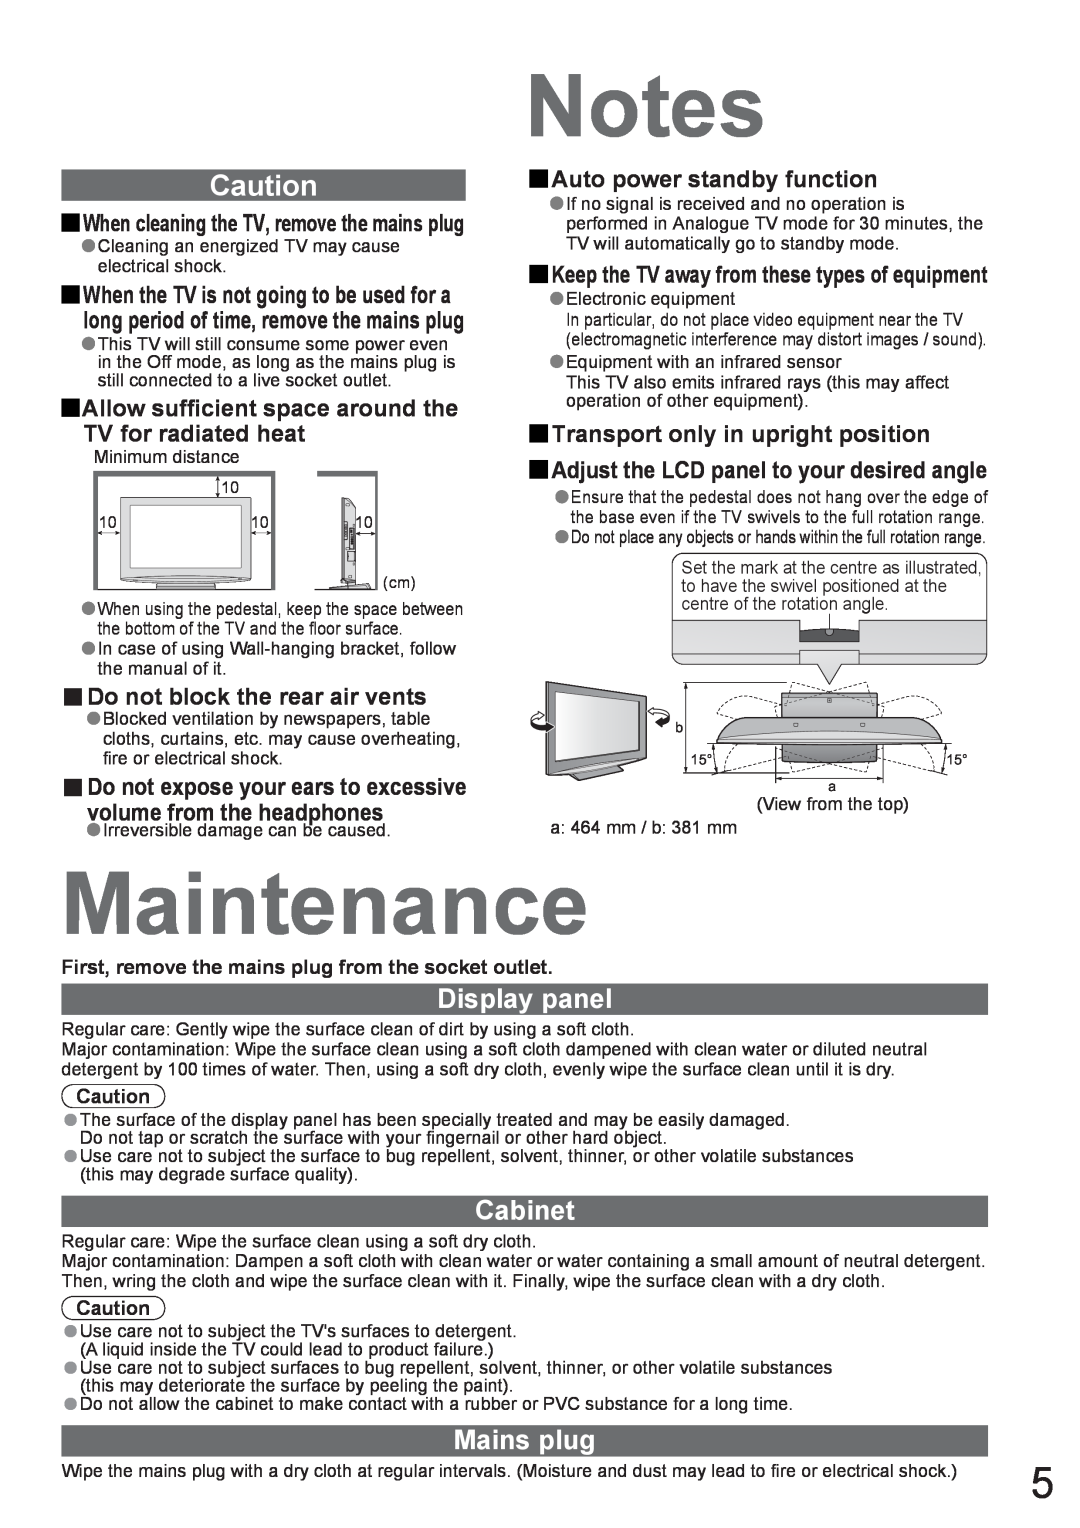 Panasonic TX-37LZD800A manual Maintenance, Display panel, Cabinet, Mains plug, Do not block the rear air vents 